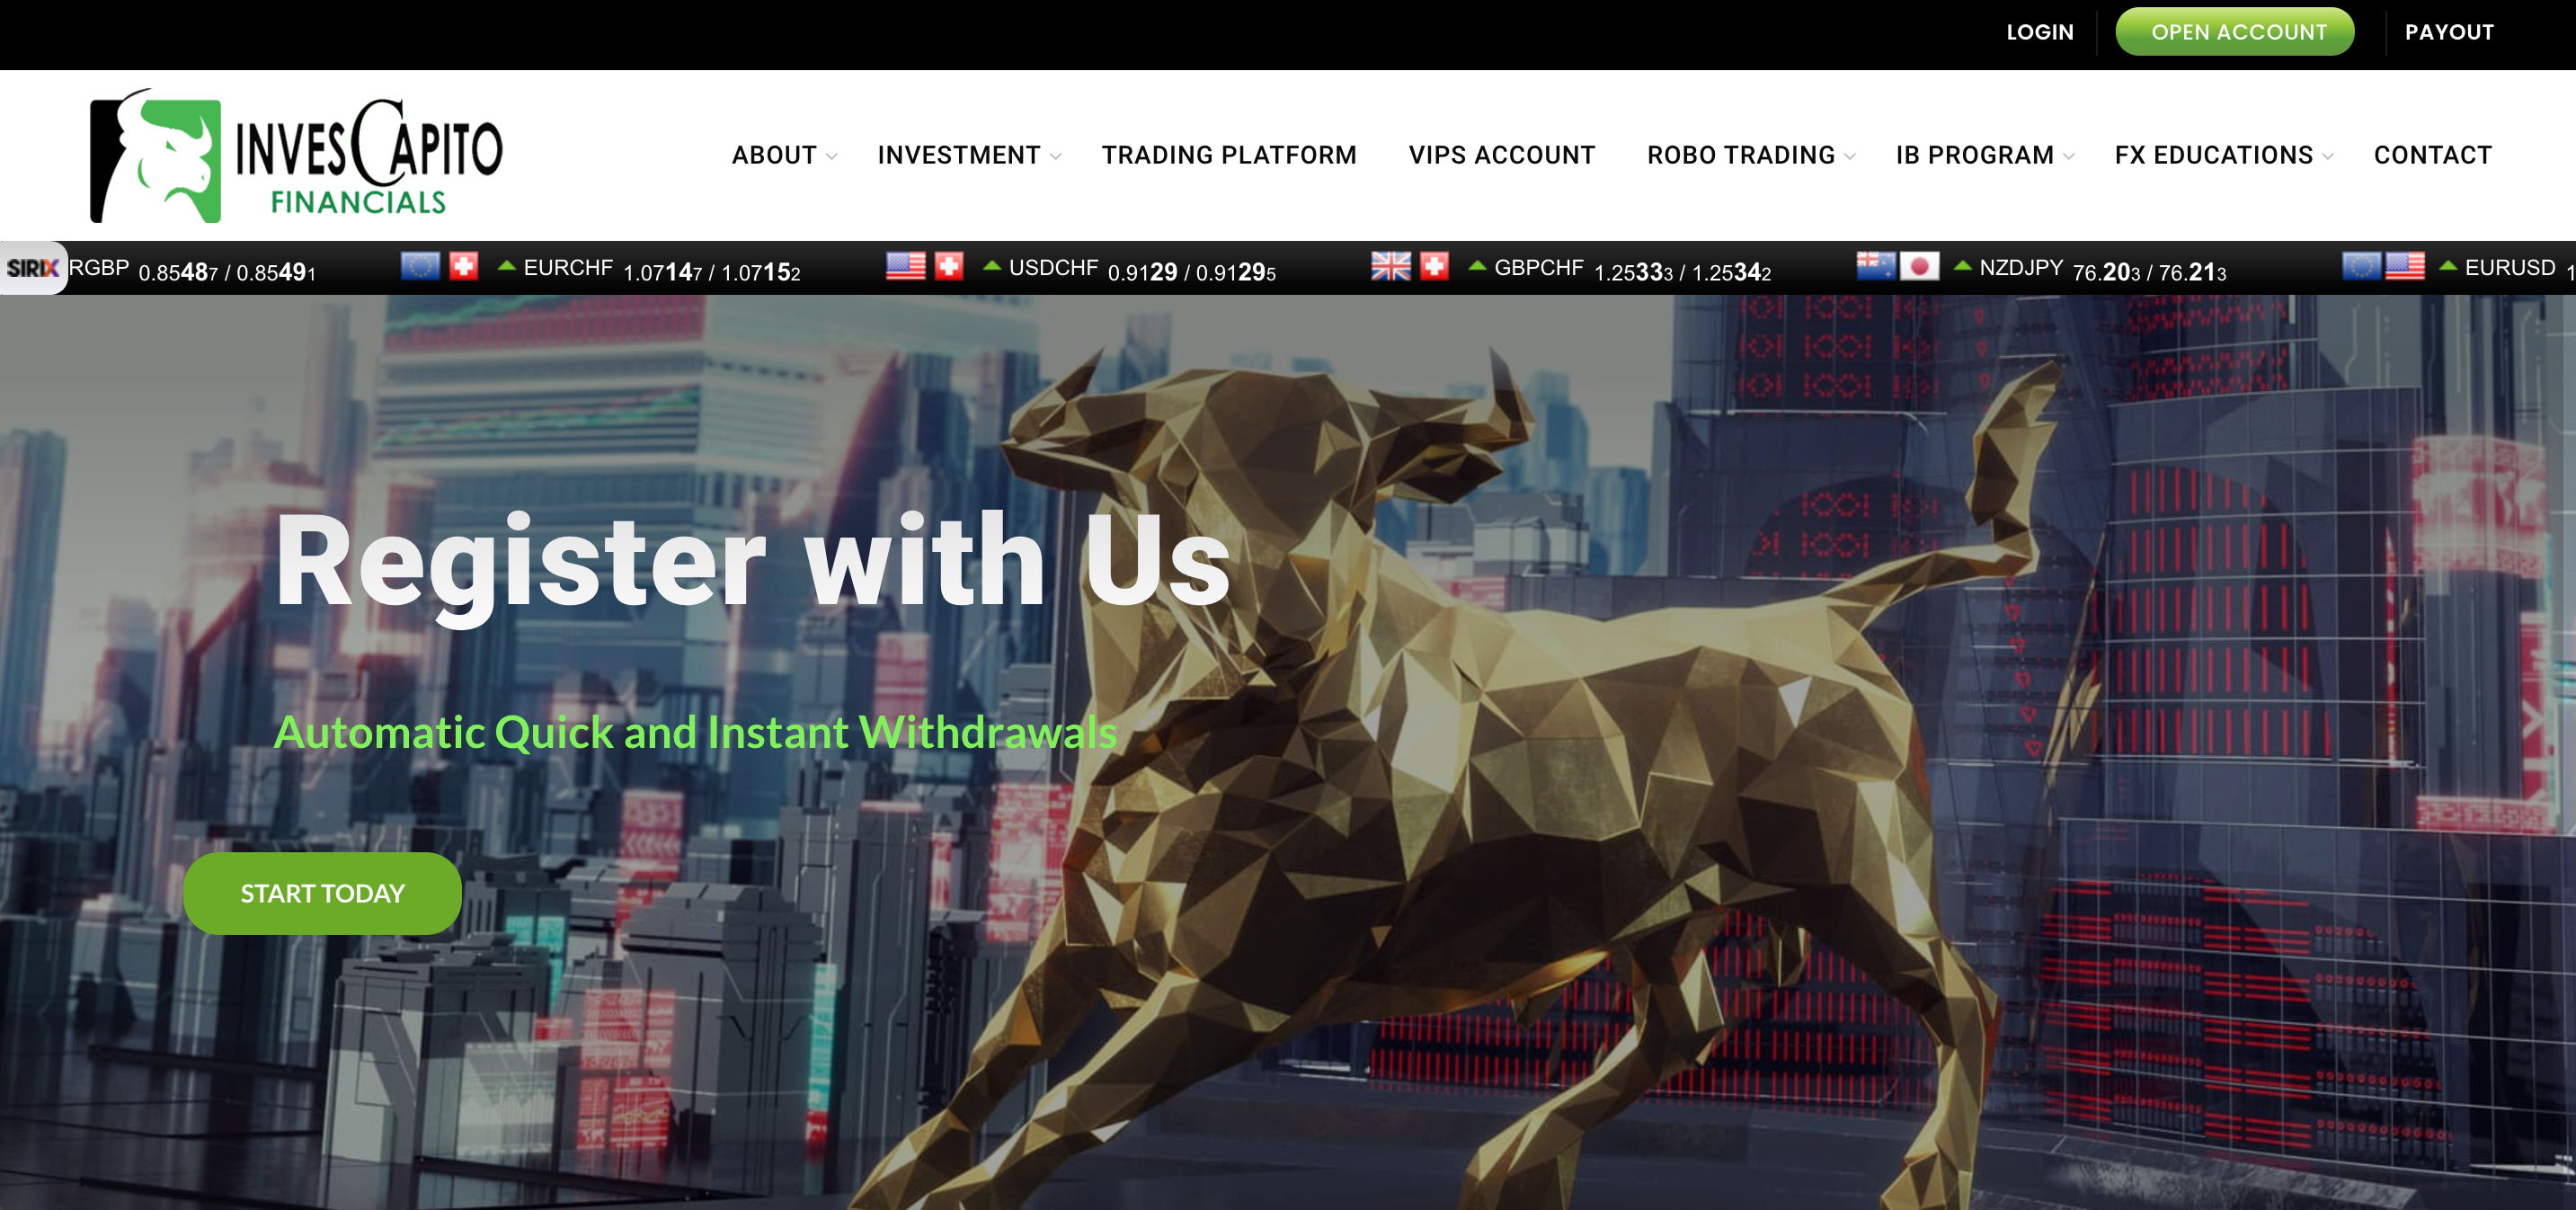 InvesCapito financials website